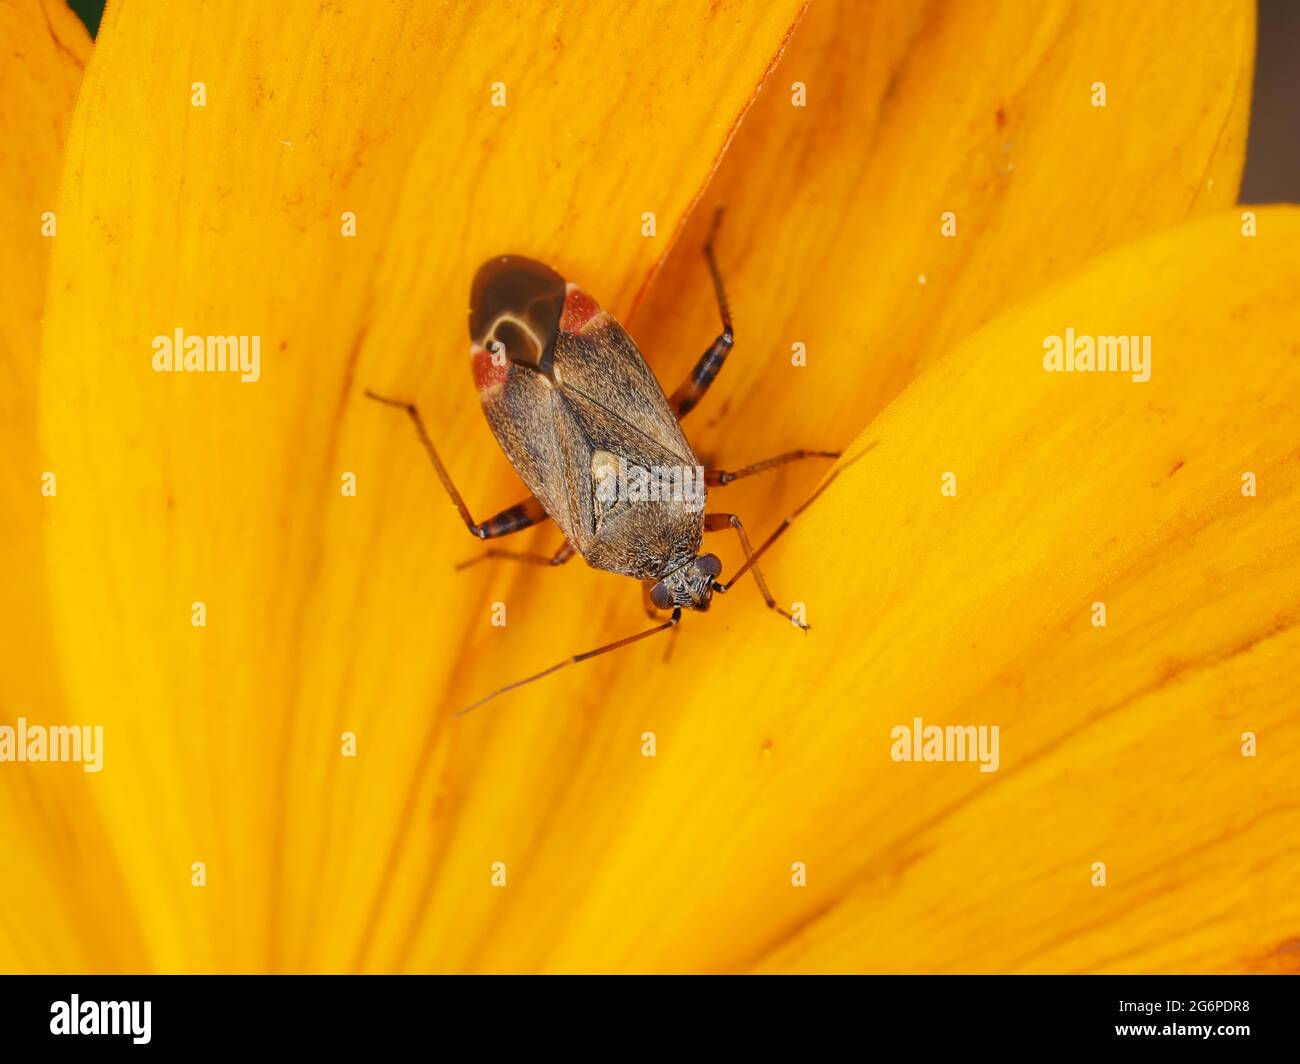 Miridae bug on flower petals Stock Photo